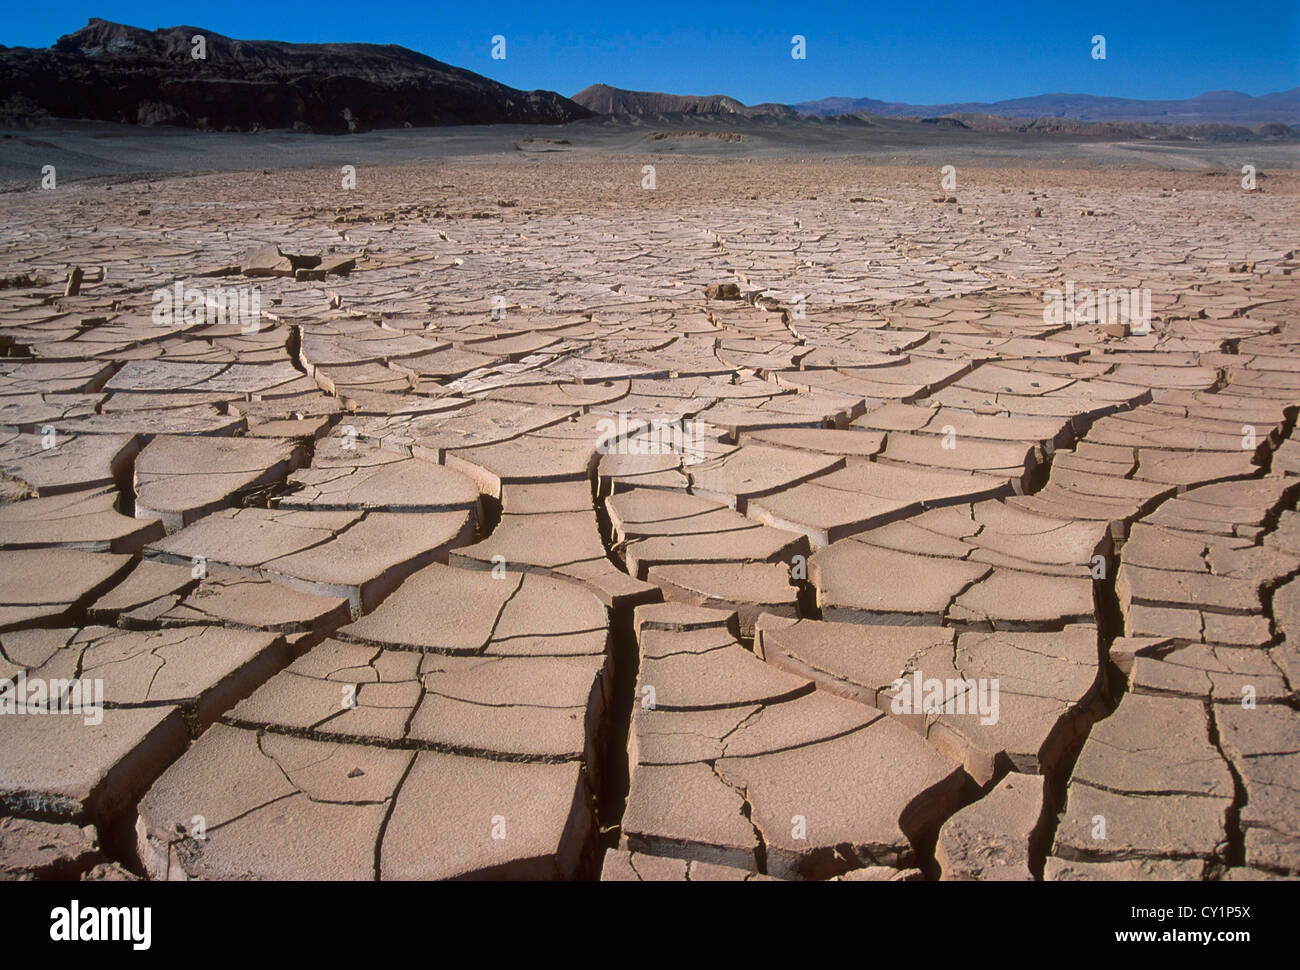 Rissigen Boden, Dürre. Atacama-Wüste, Chile, Südamerika. Stockfoto